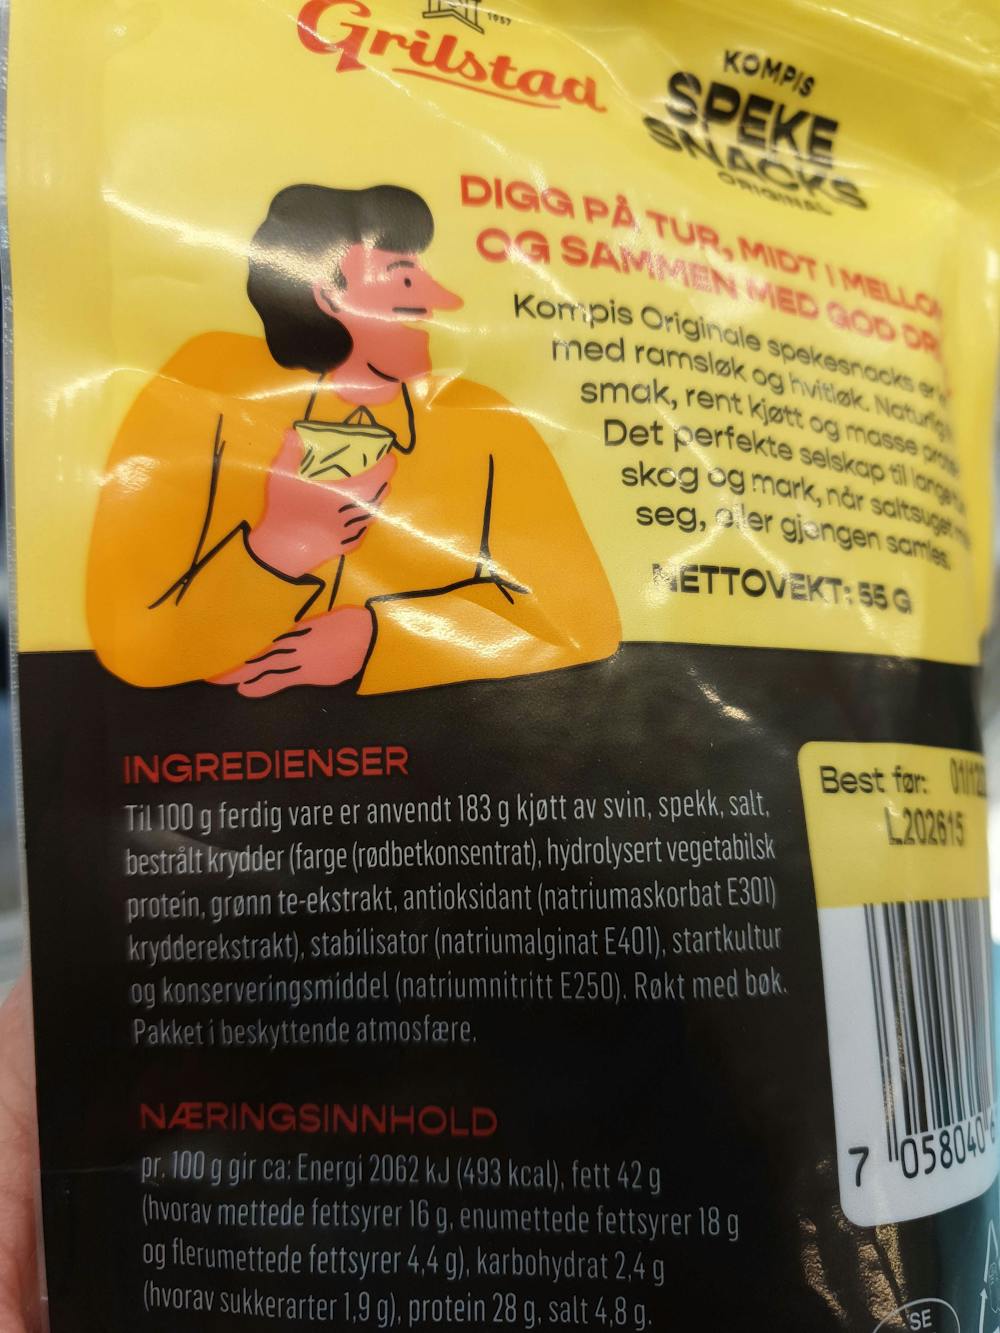 Ingrediensliste - Kompis spekesnacks orginal, Grilstad